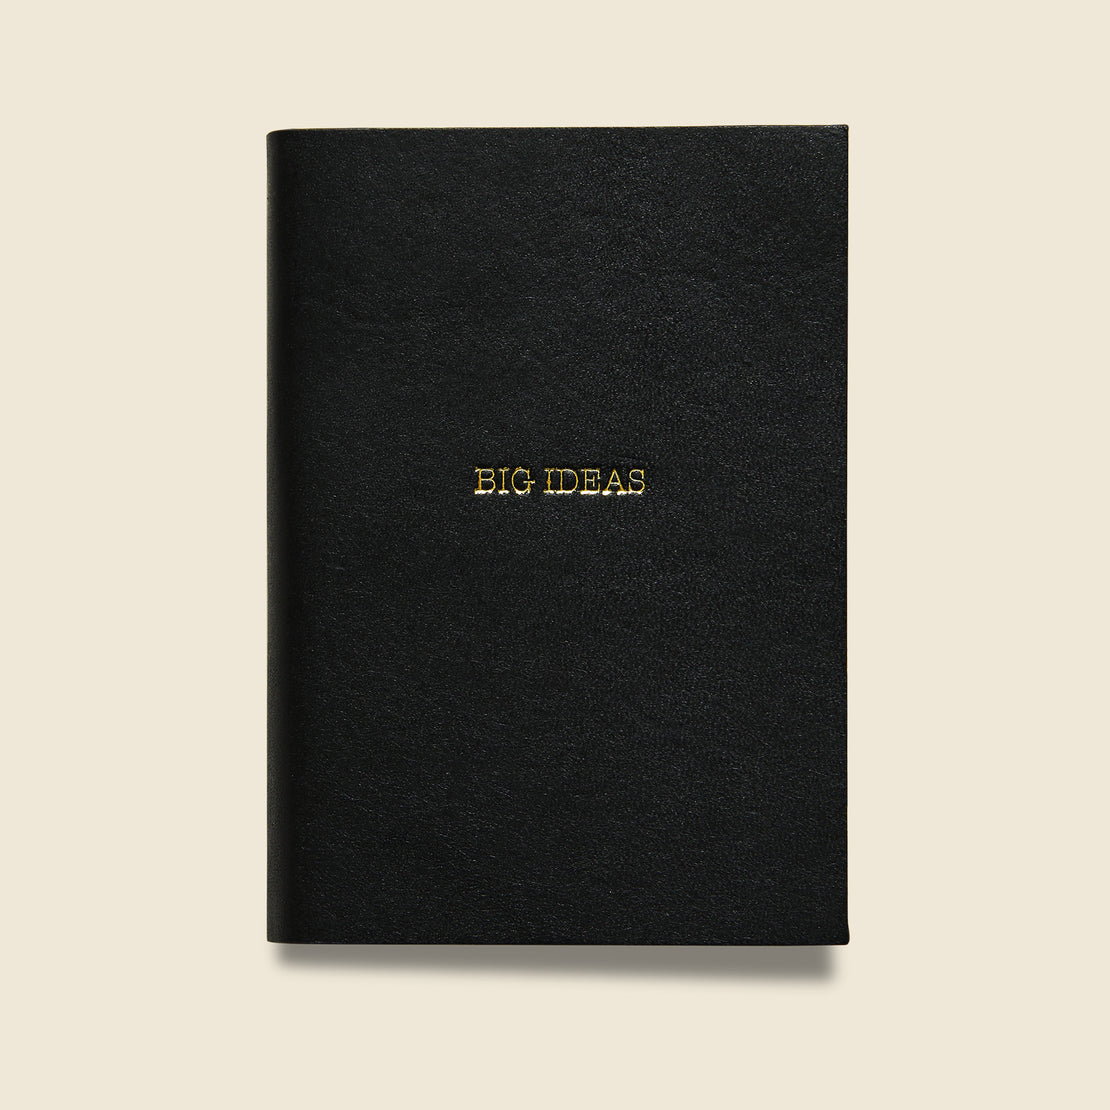 Paper Goods "BIG IDEAS" Leather Journal - Black